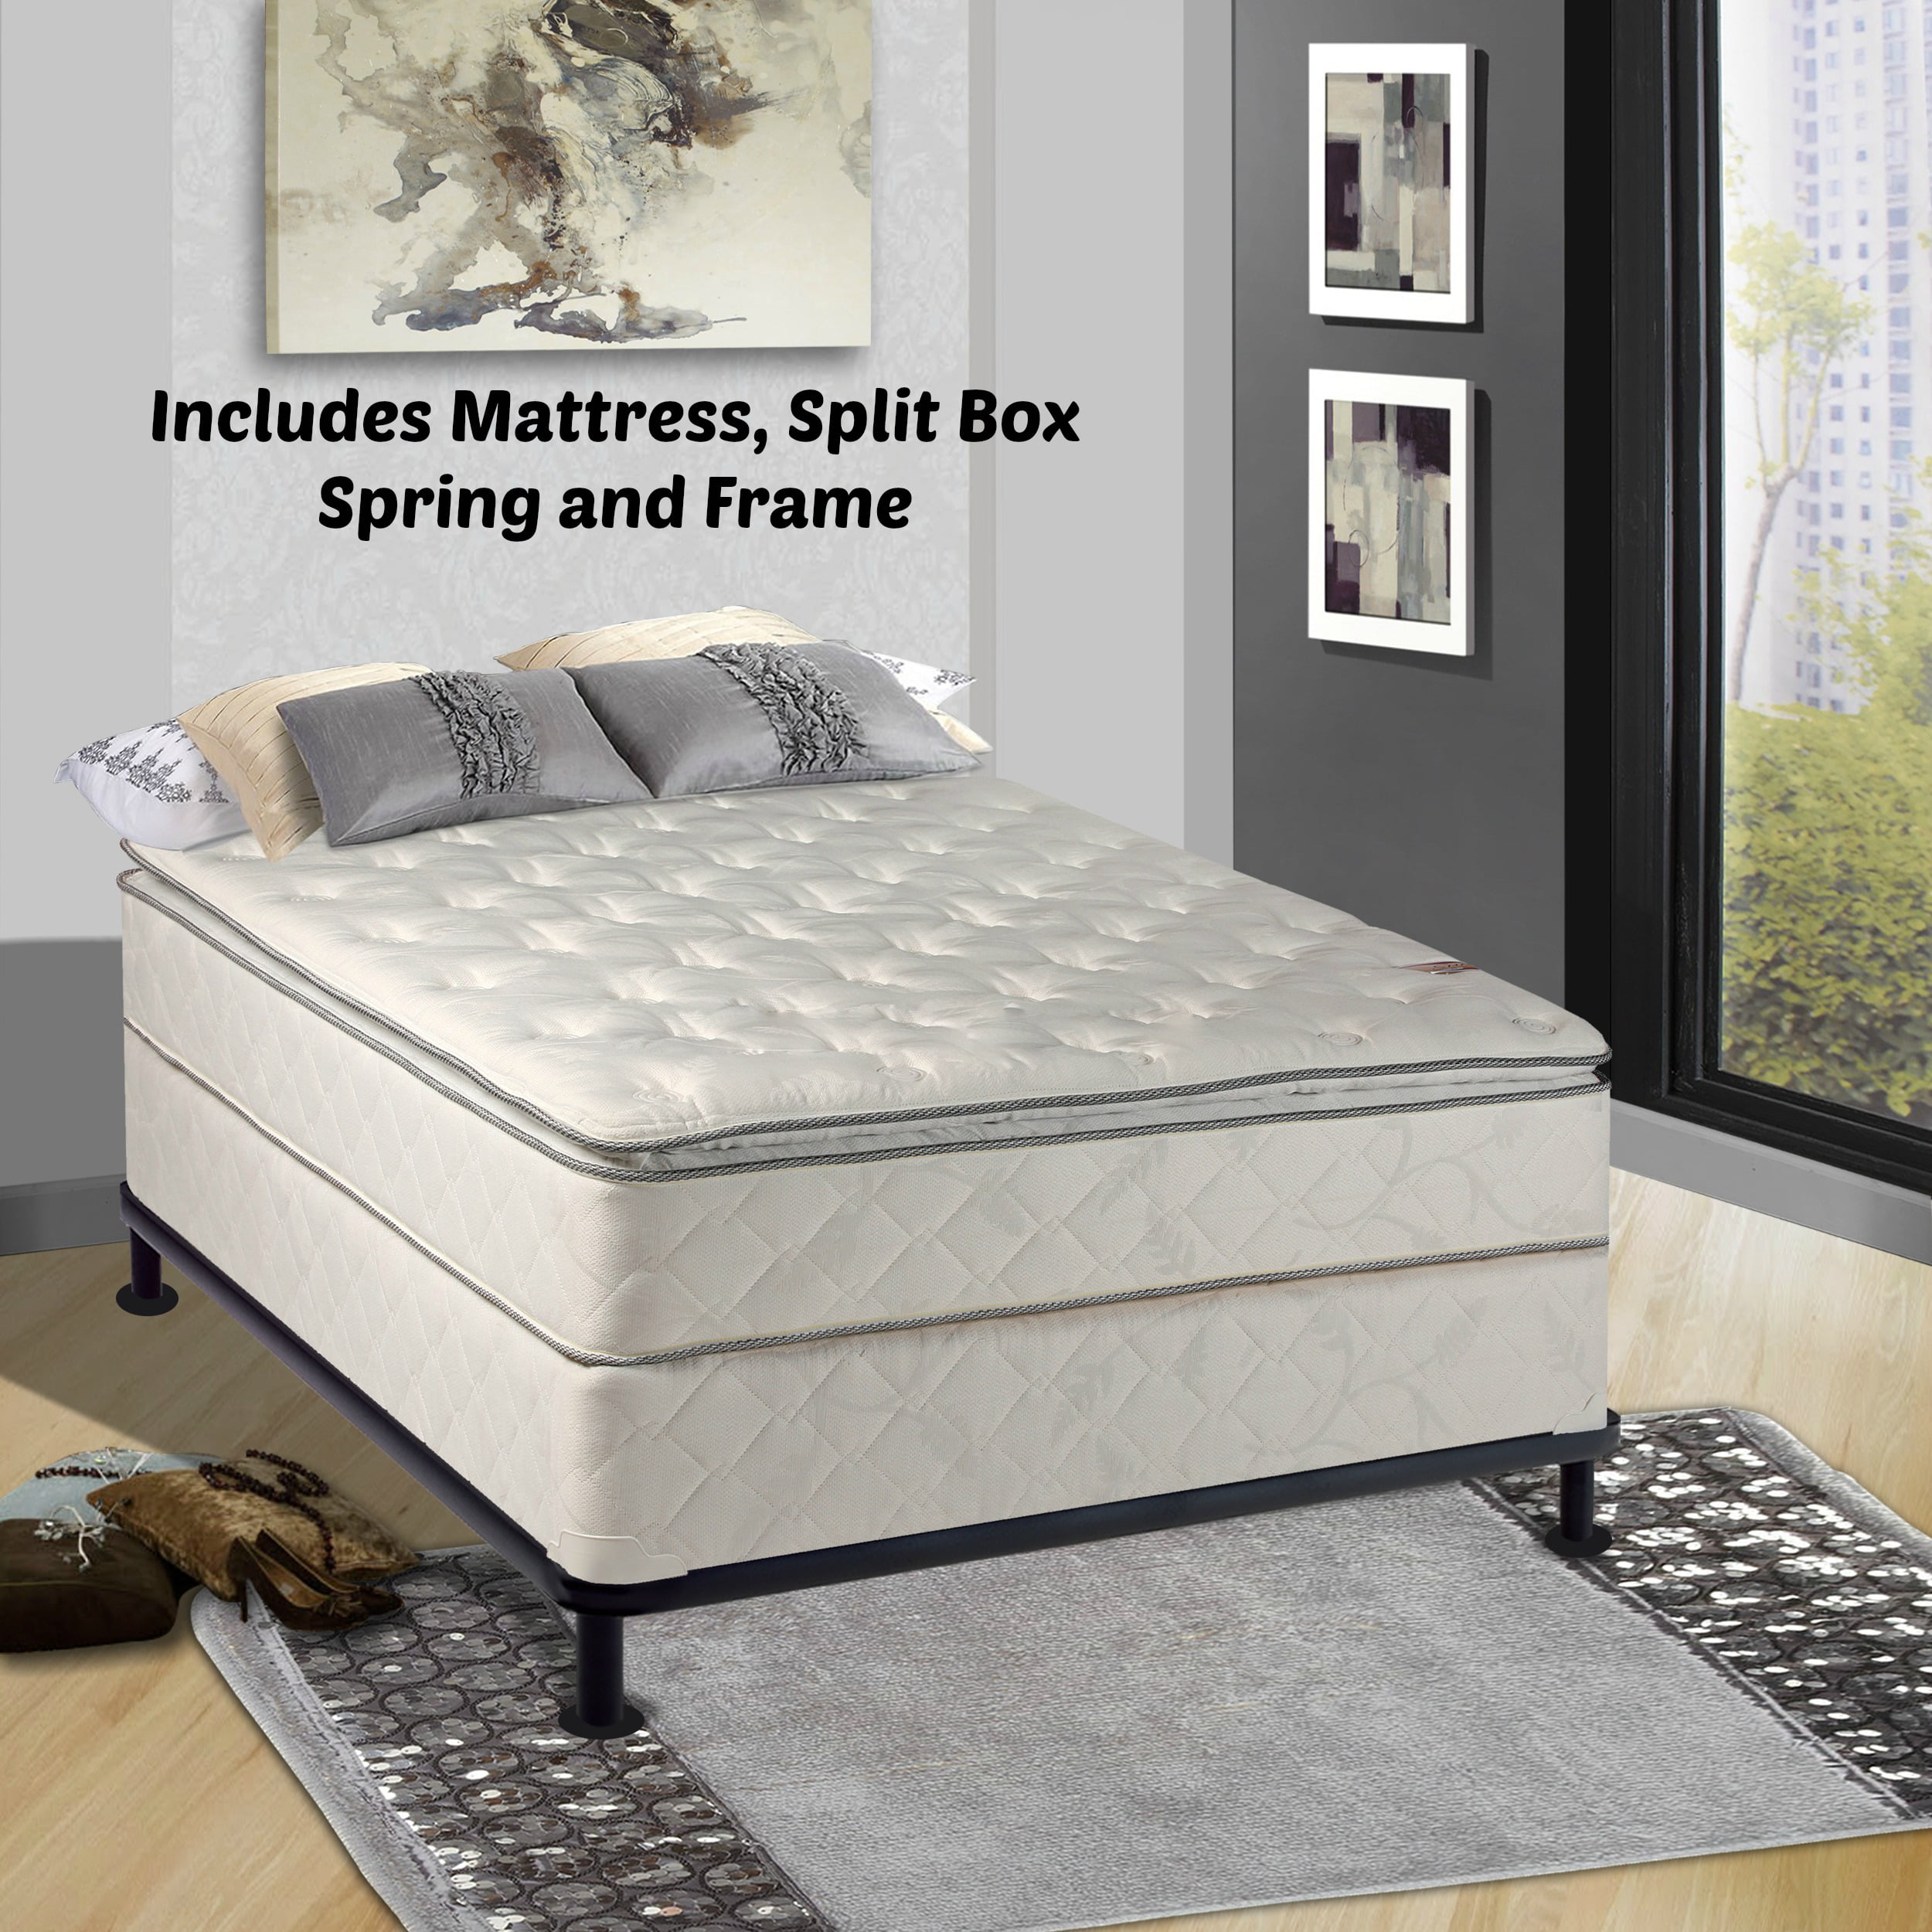 Continental Sleep, 10Inch Fully Assembled Pillow Top Innerspring Mattress and 8" Split Box